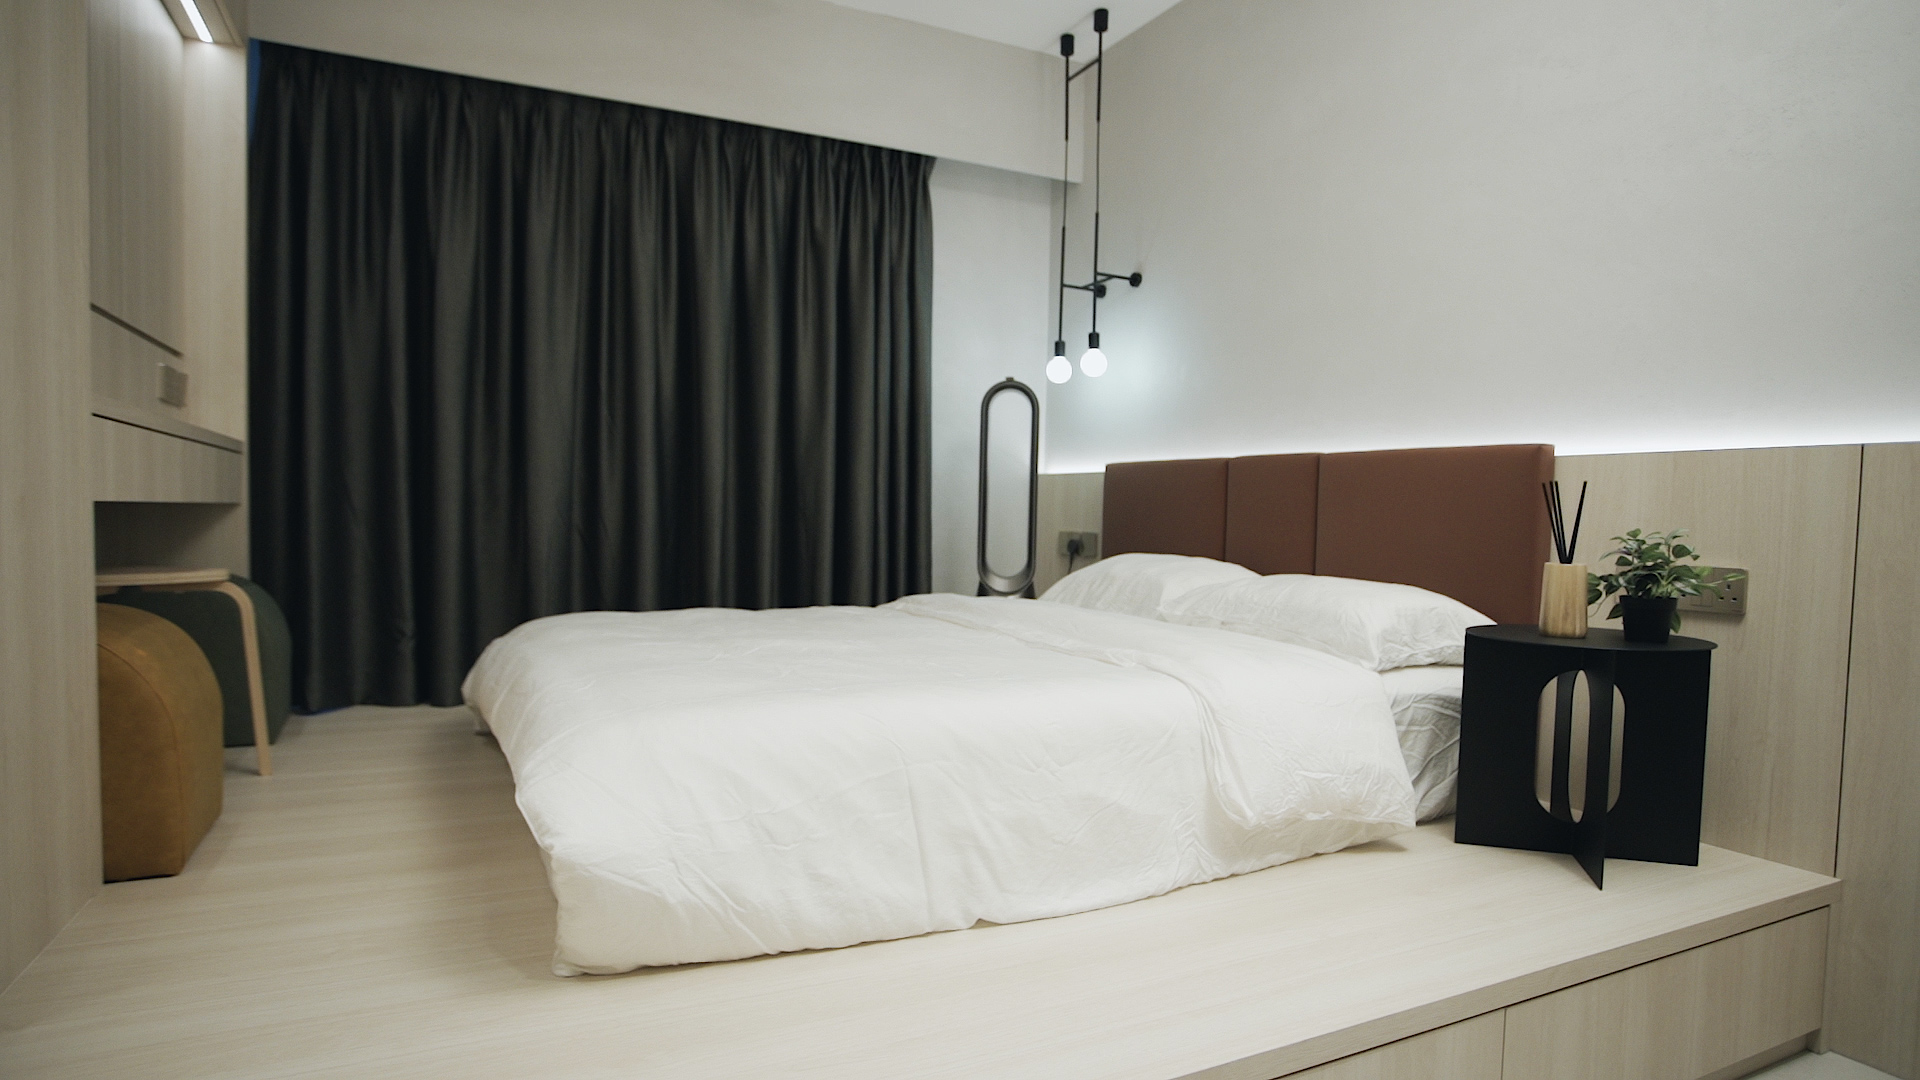 squarerooms dyson tp09 air purifier fan cool homeowners hdb bto flat bedroom